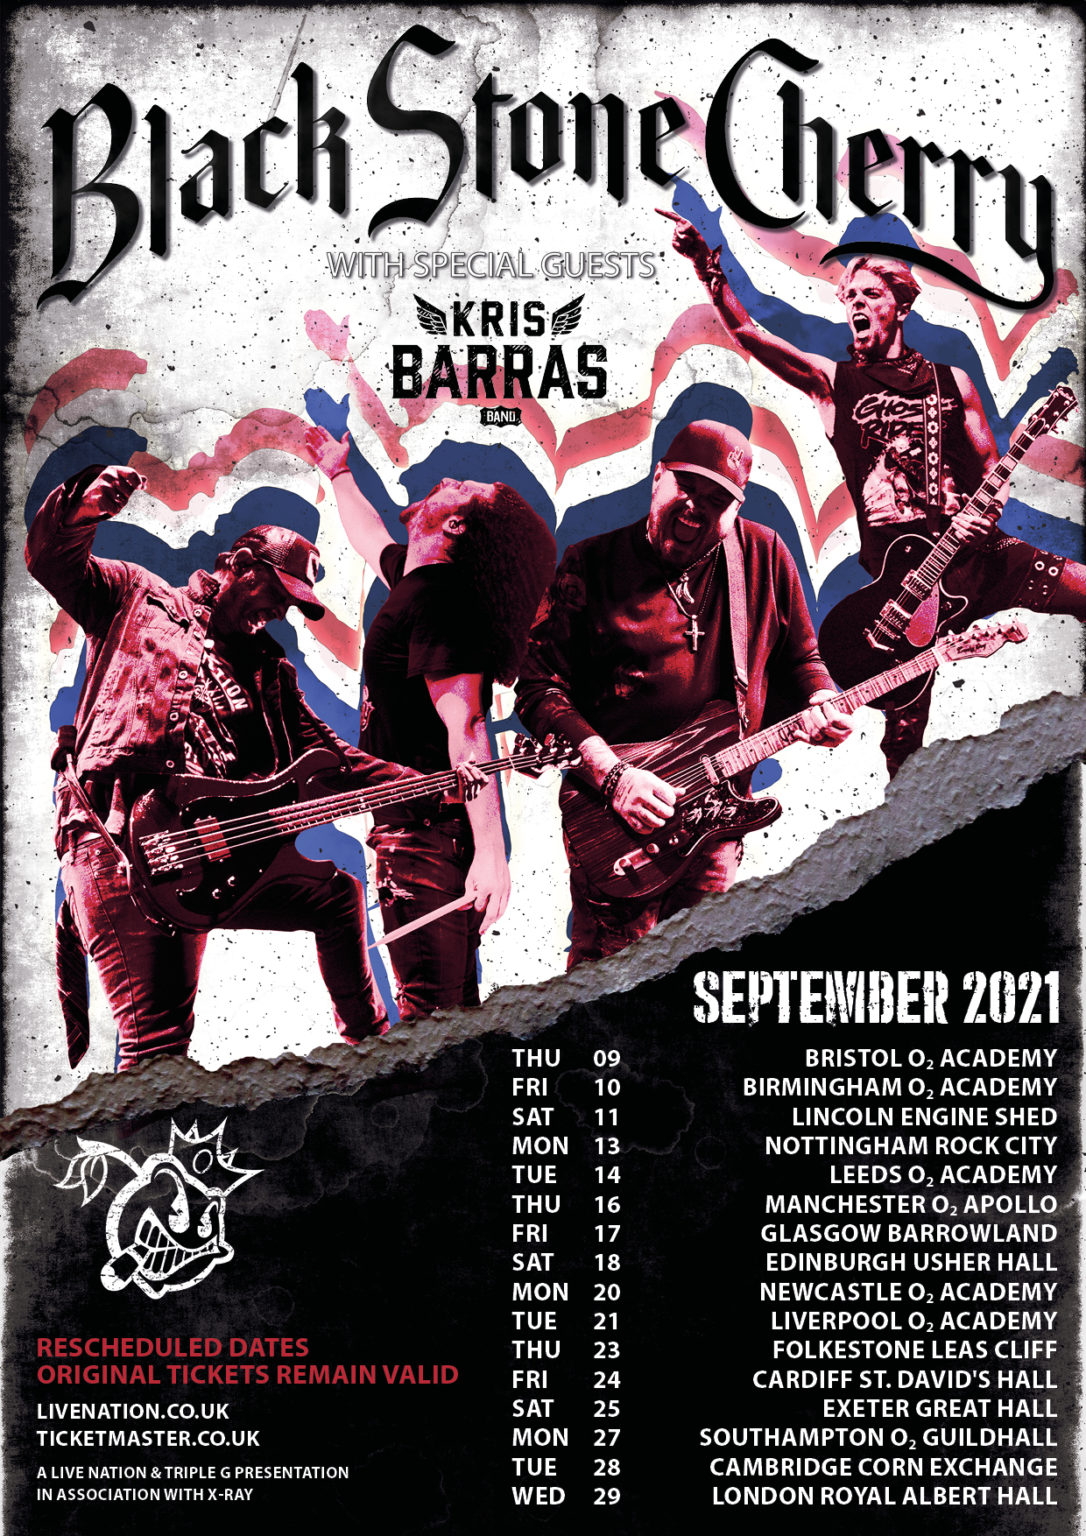 Black Stone Cherry Postpone UK Tour Dates And Reschedule To 2021